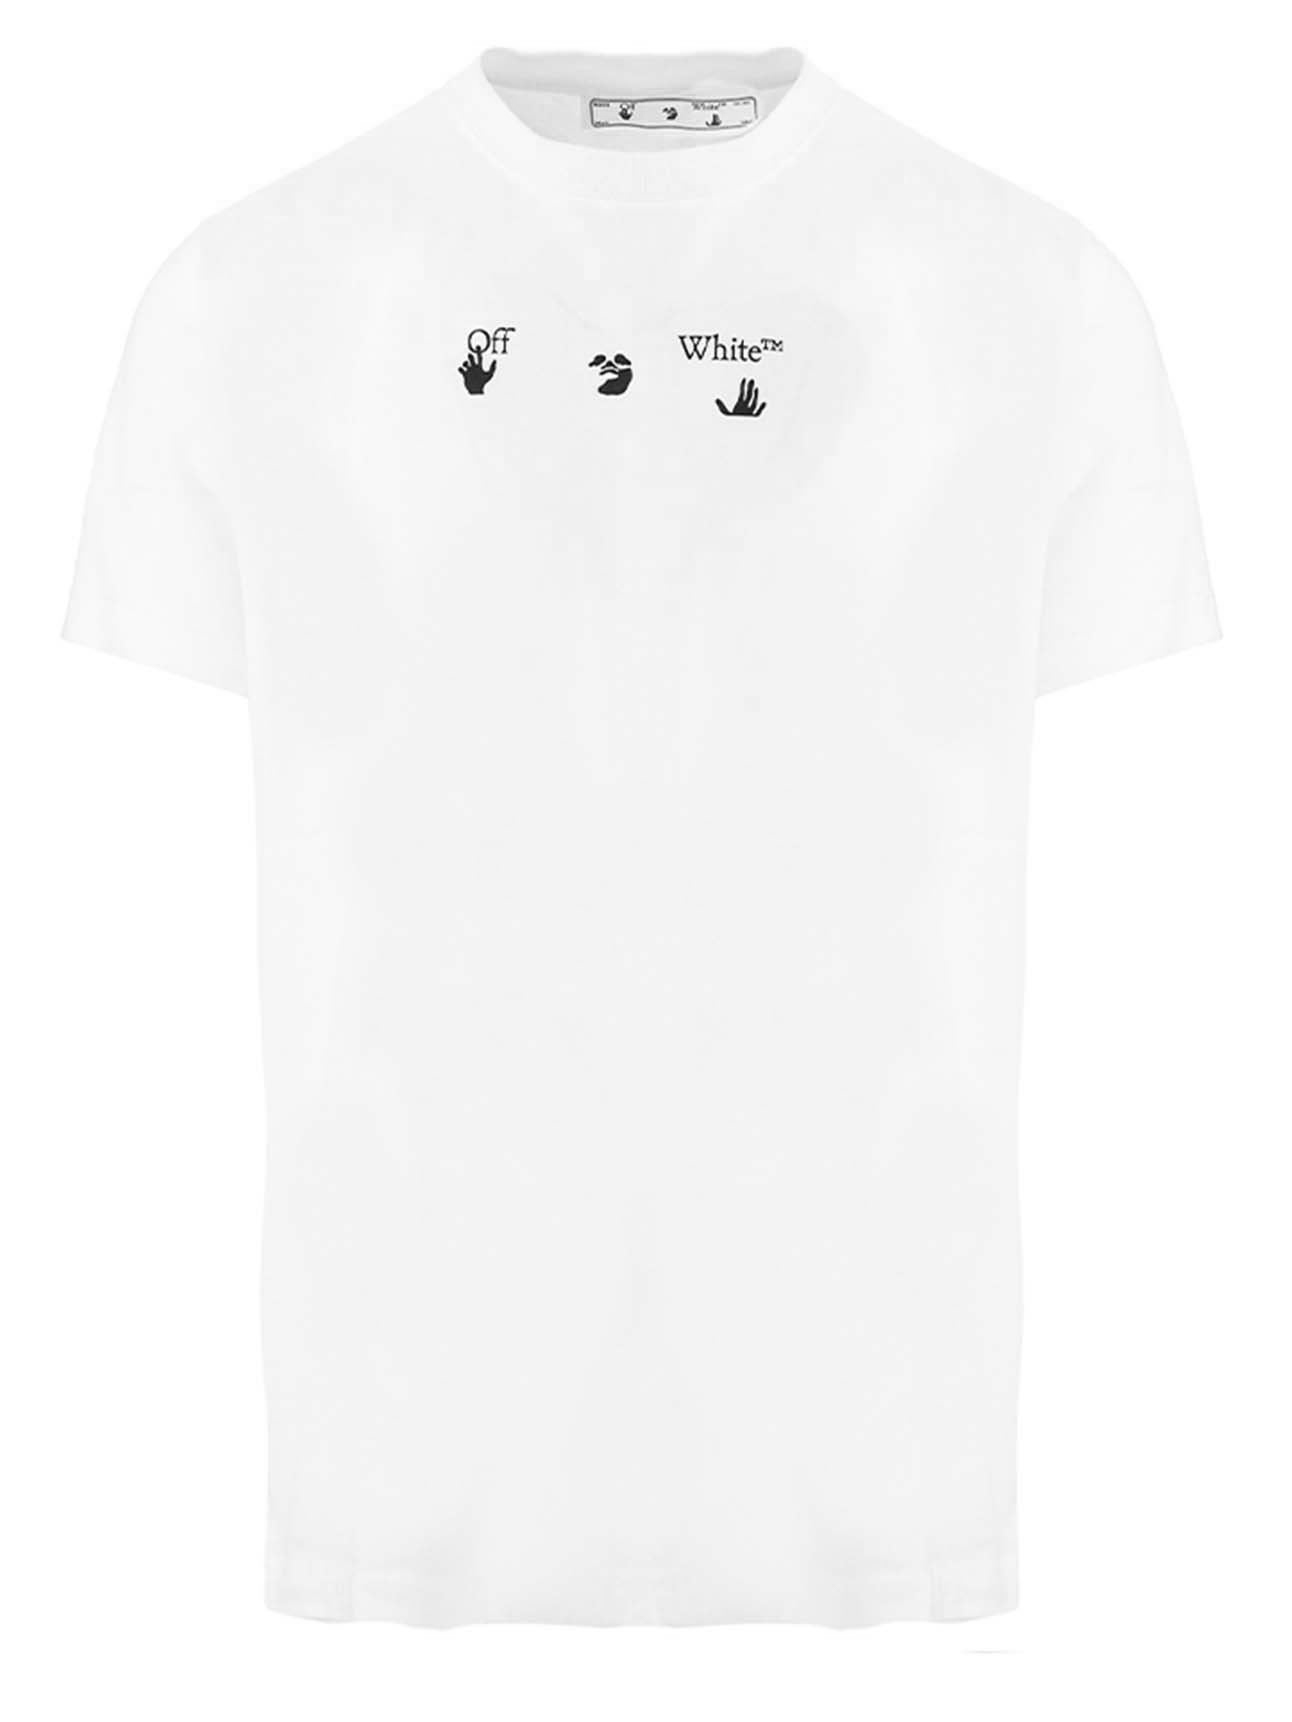 Off-White Spray Marker T-shirt White Black